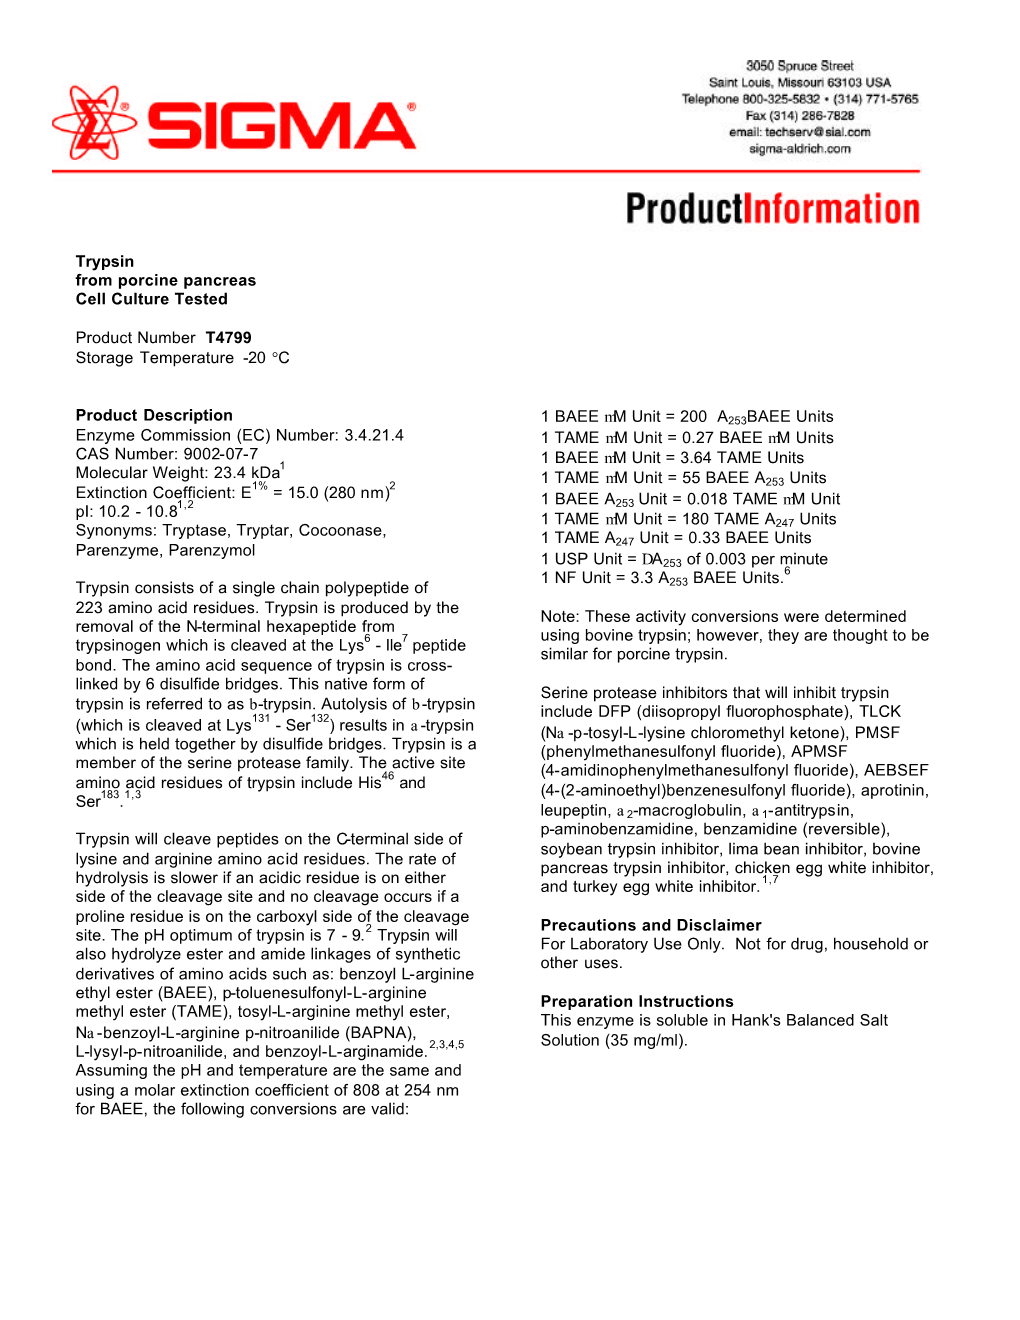 Product Information Sheet (PDF)